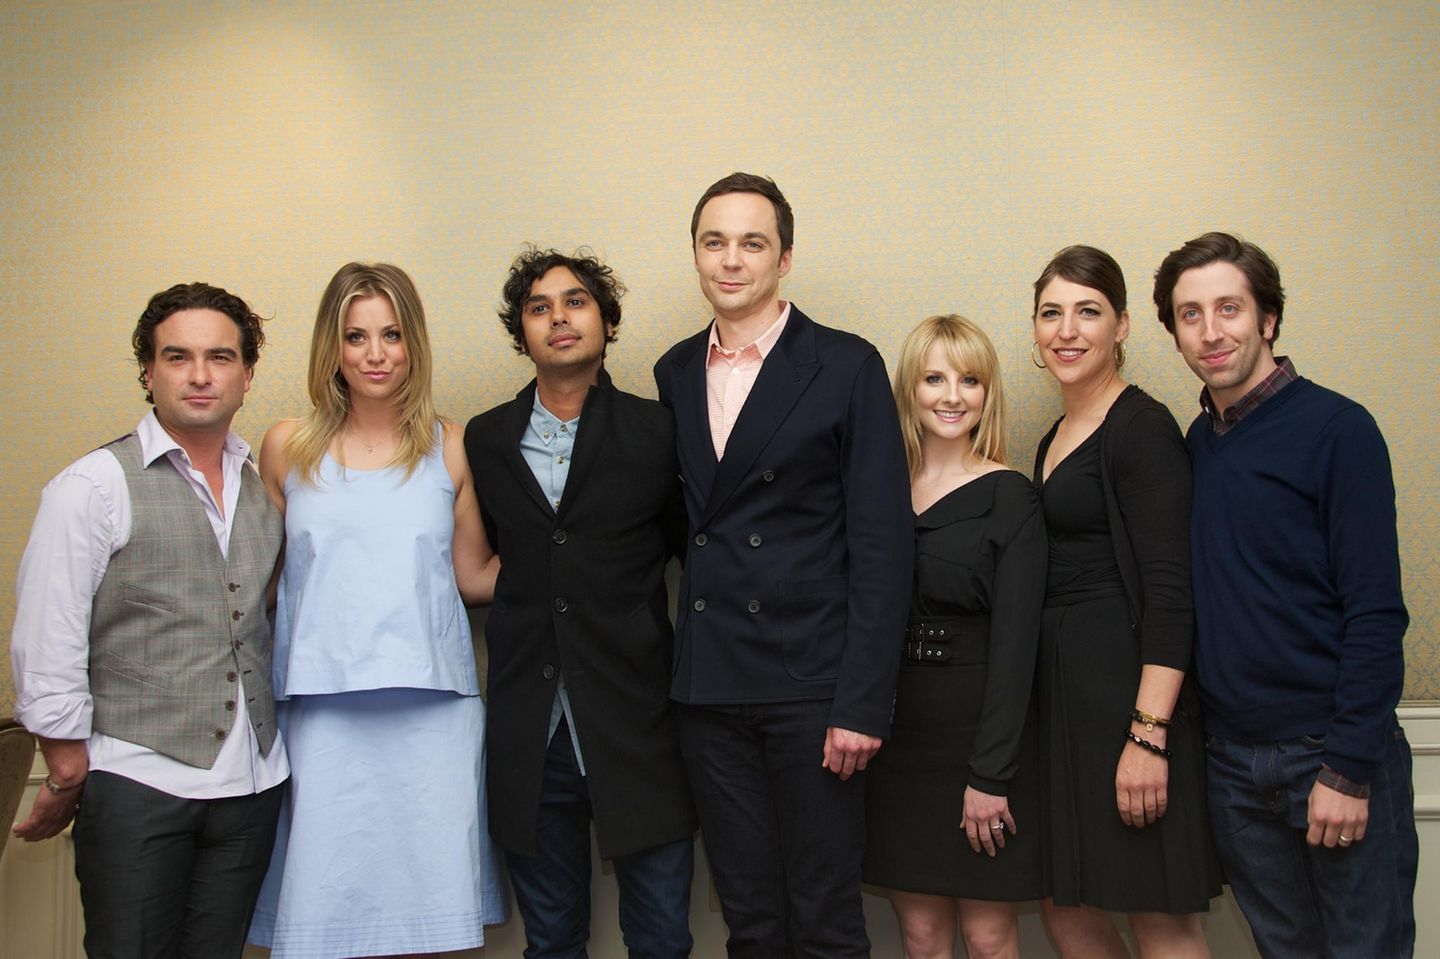 Feierten von 2007 bis 2019 Erfolge mit "The Big Bang Theory": Johnny Galecki, Kaley Cuoco, Kunal Nayyar, Jim Parsons, Melissa Rauch, Mayim Bialik und Simon Helberg